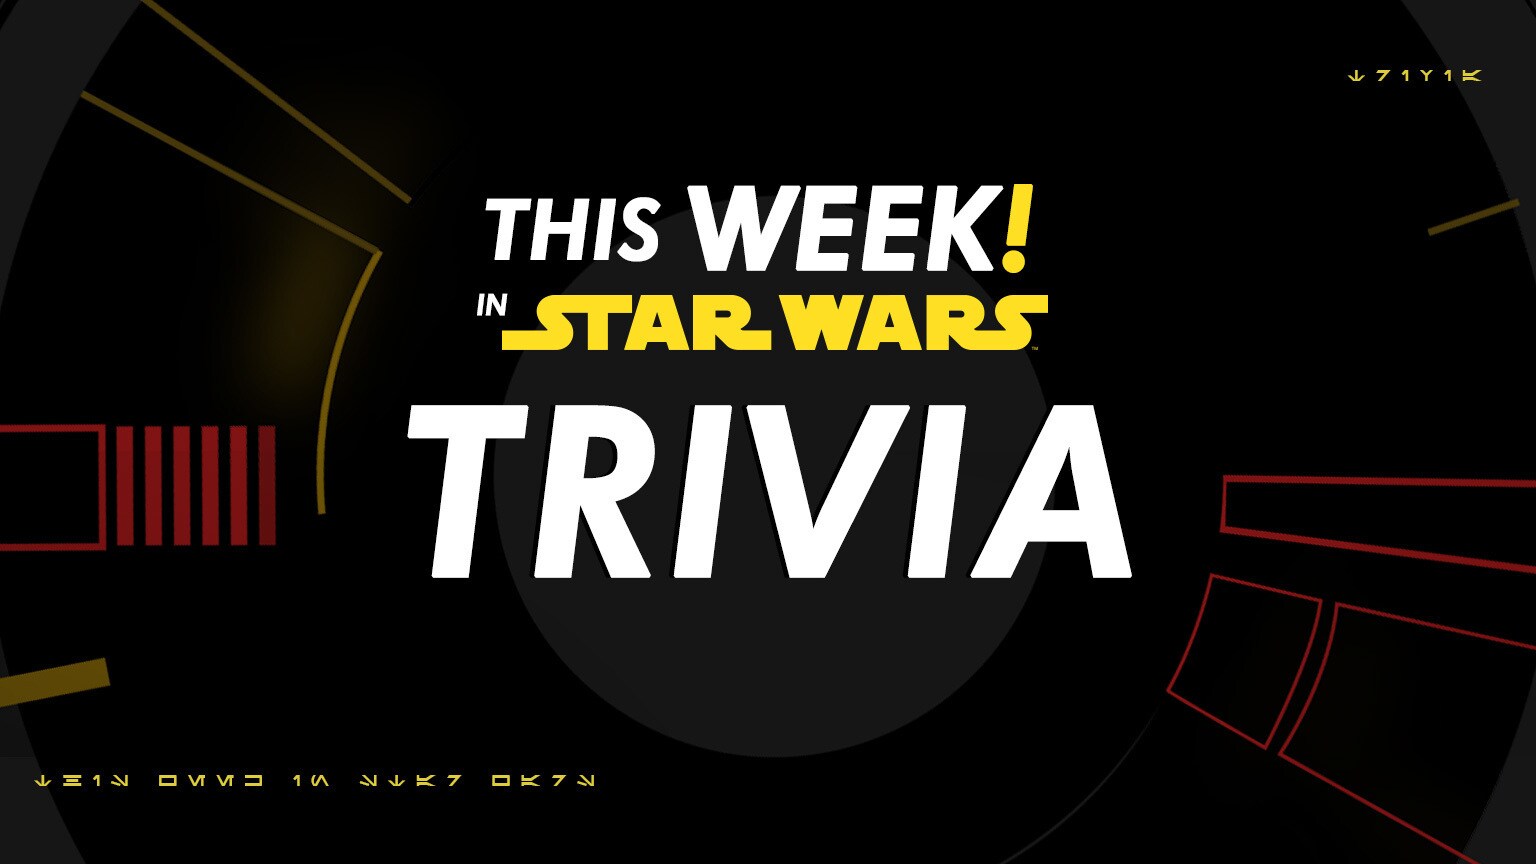 Saga-Spanning Trivia from This Week! In Star Wars